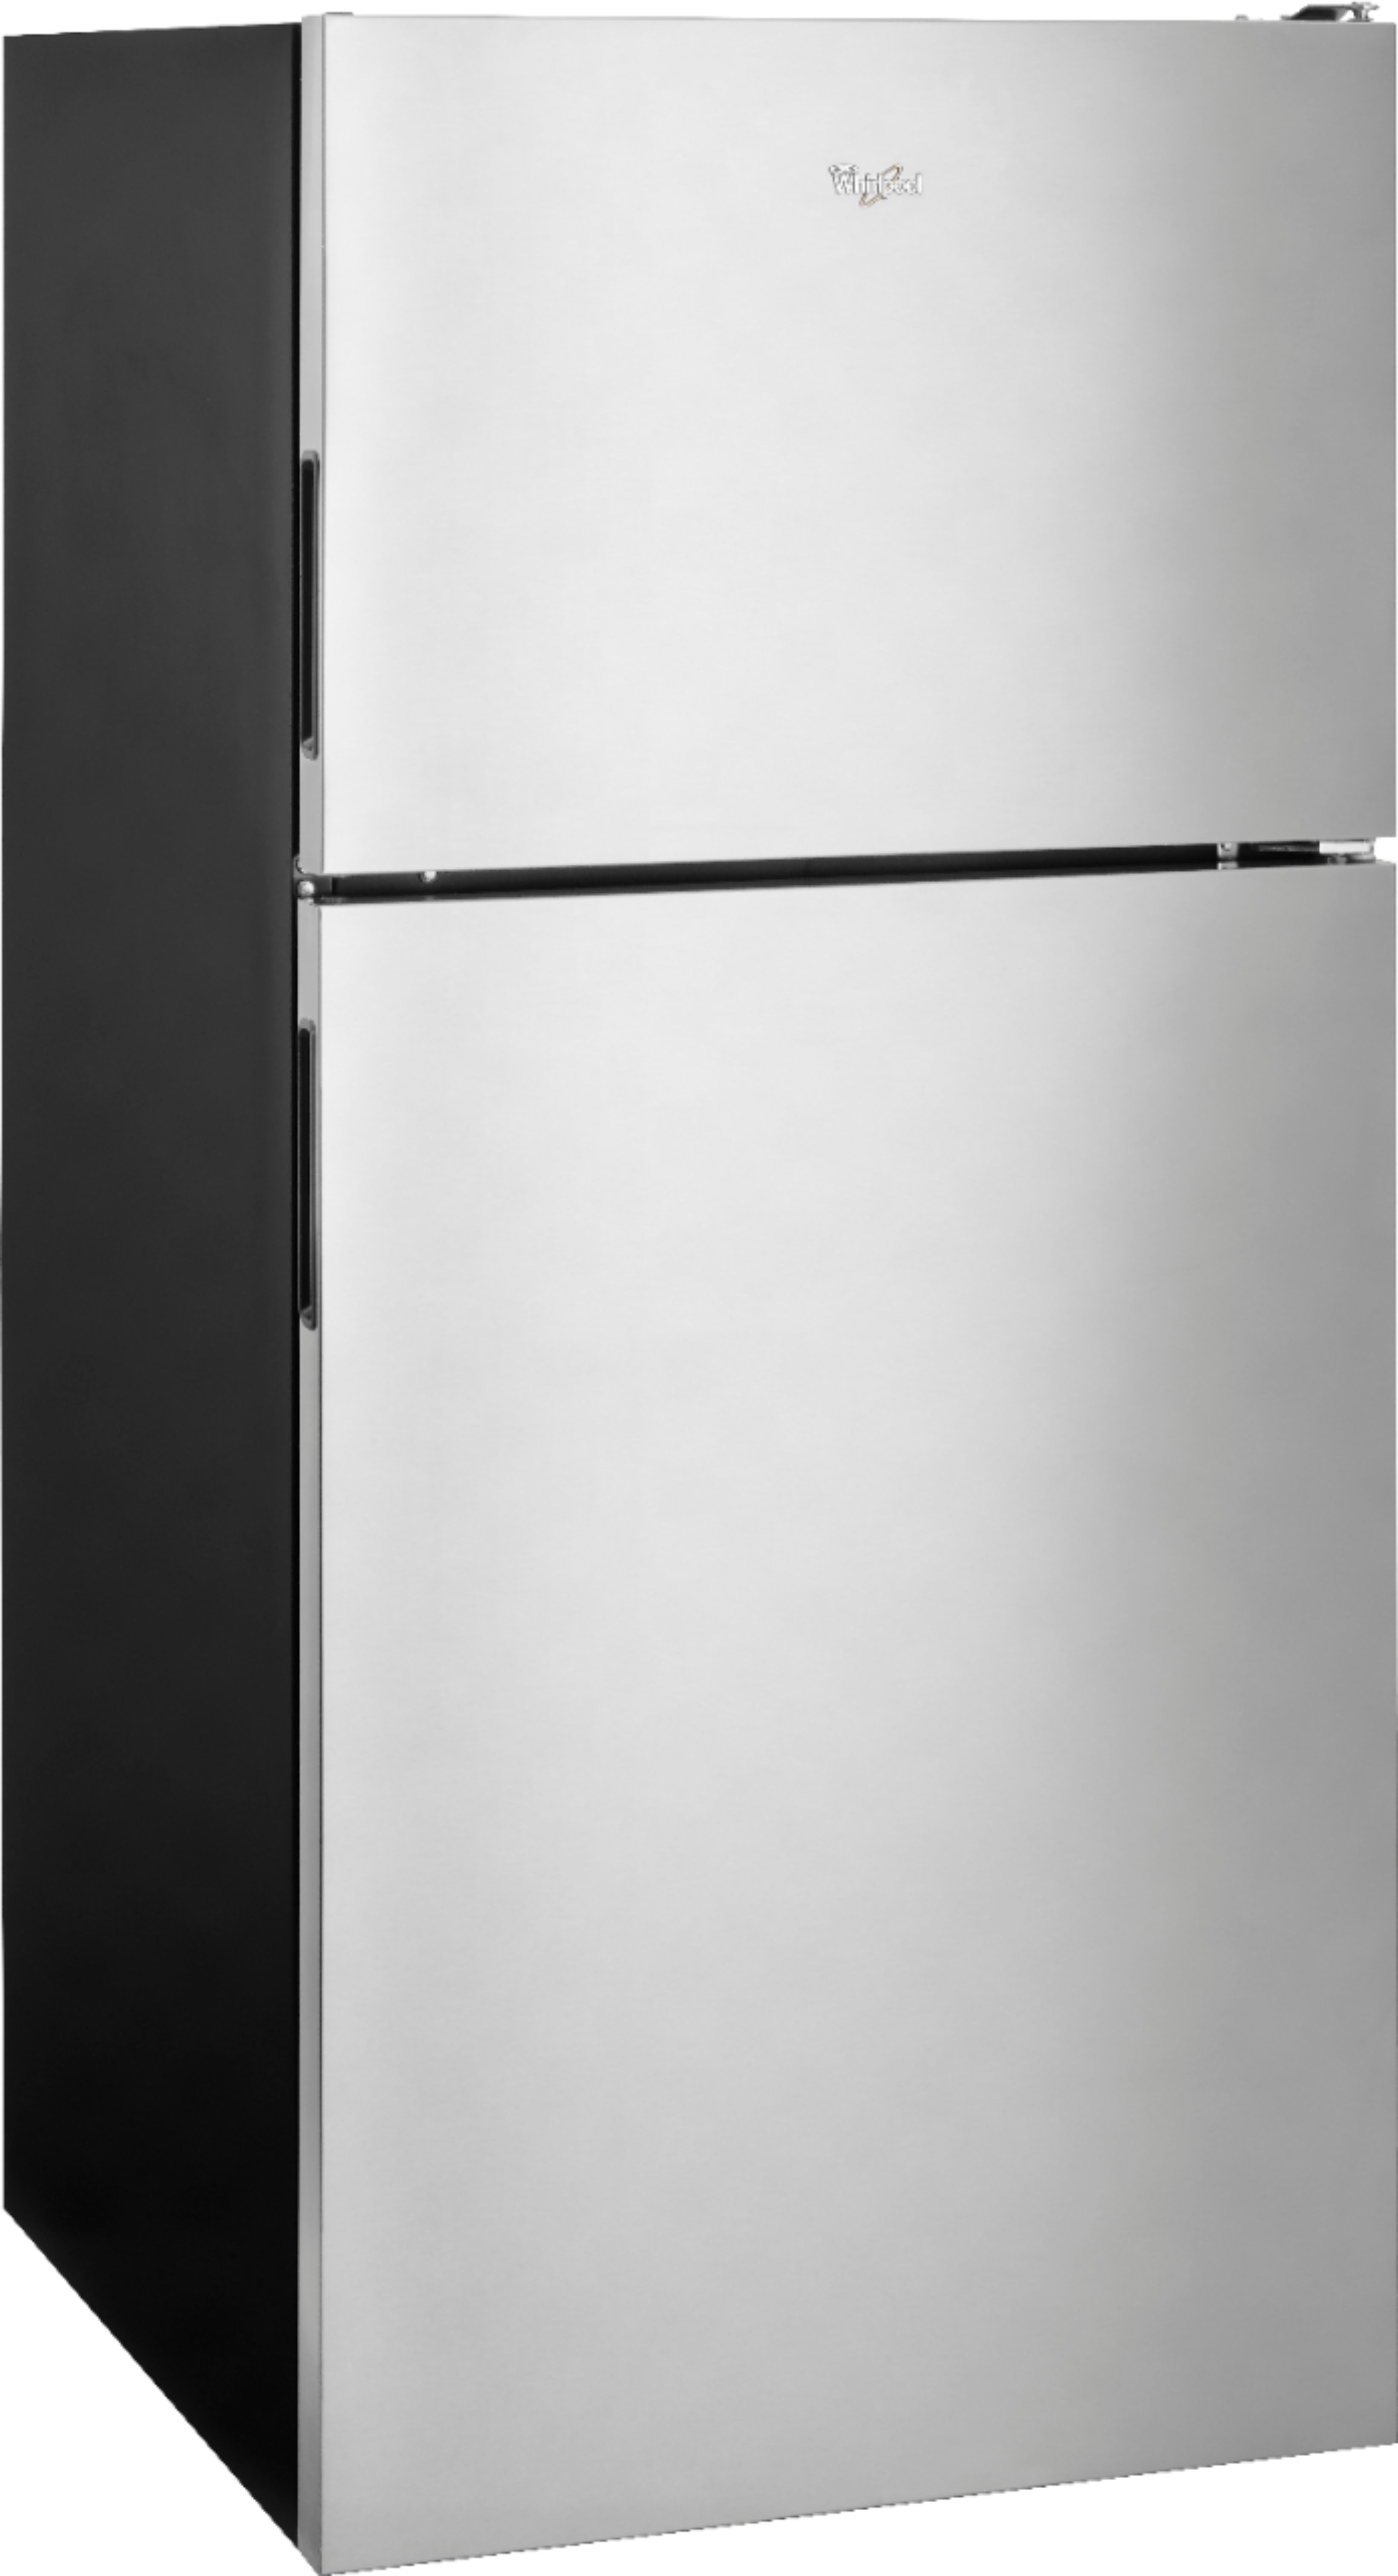 Whirlpool Stainless Steel Refrigerator Top Freezer